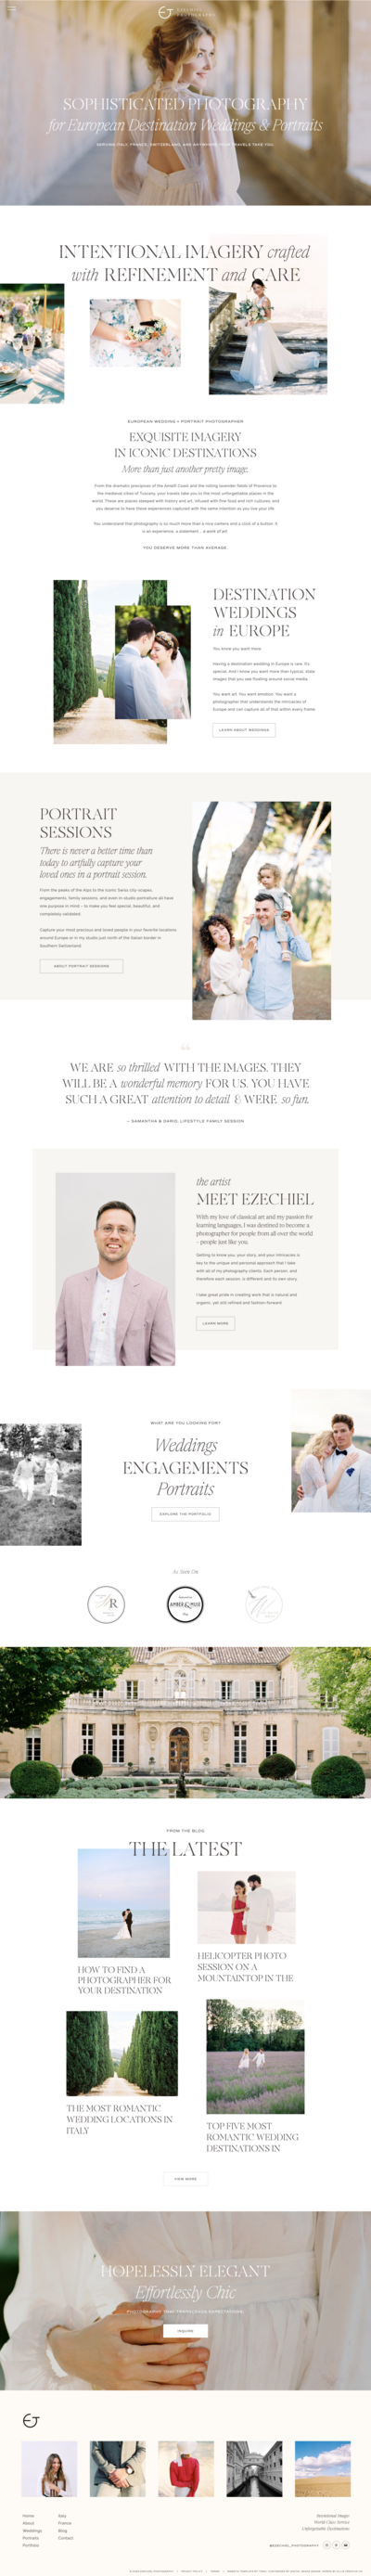 Showit Template Customization for Ezechiel Theler, wedding photographer in Switzerland